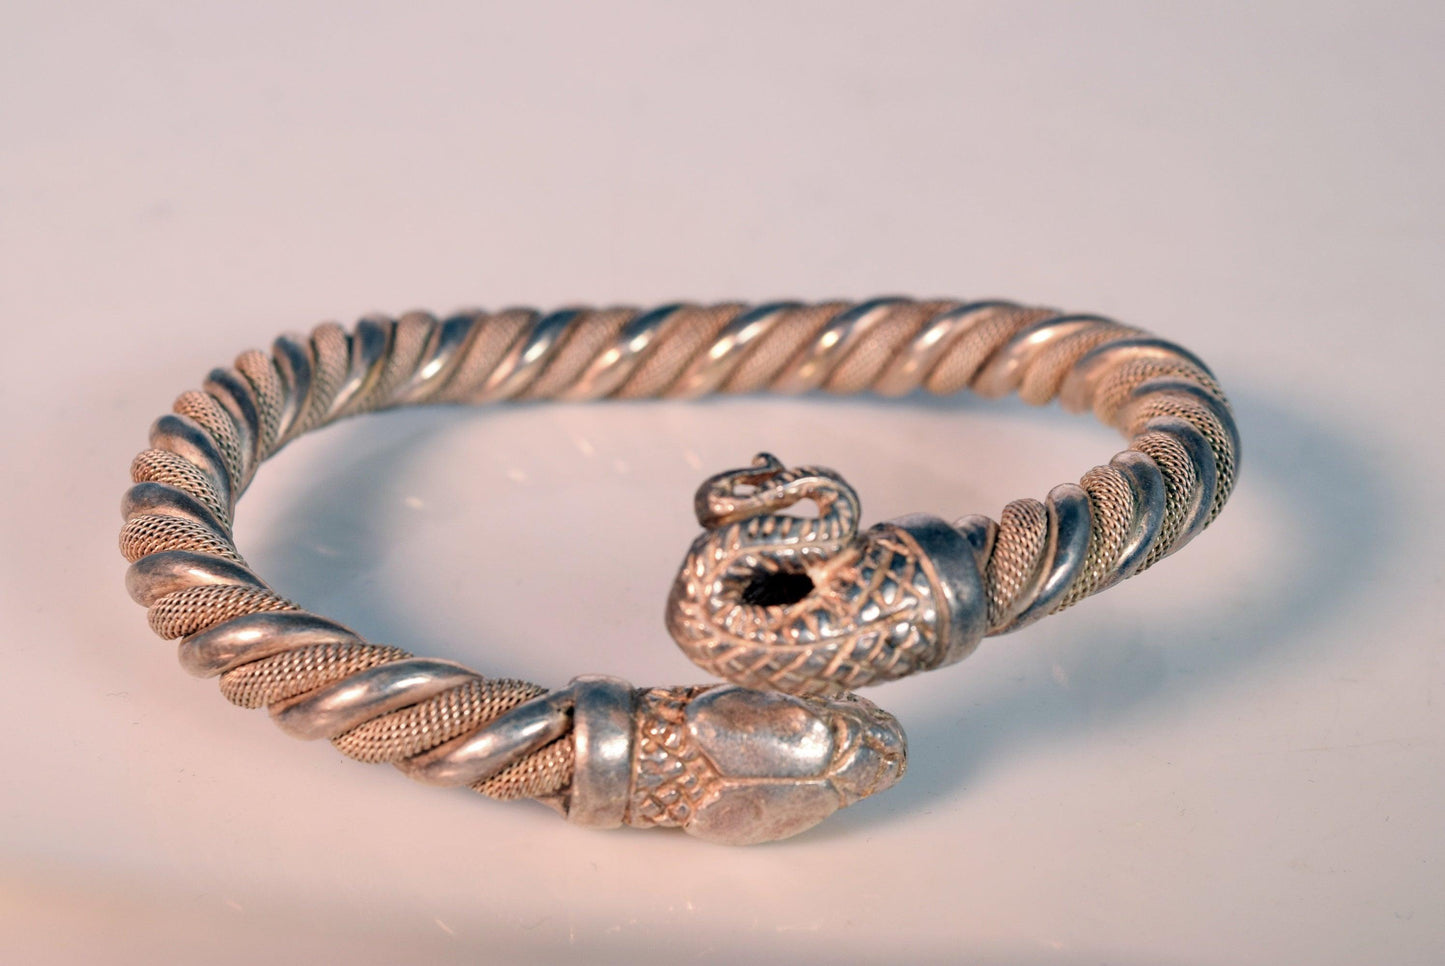 Italian silver snake bracelet